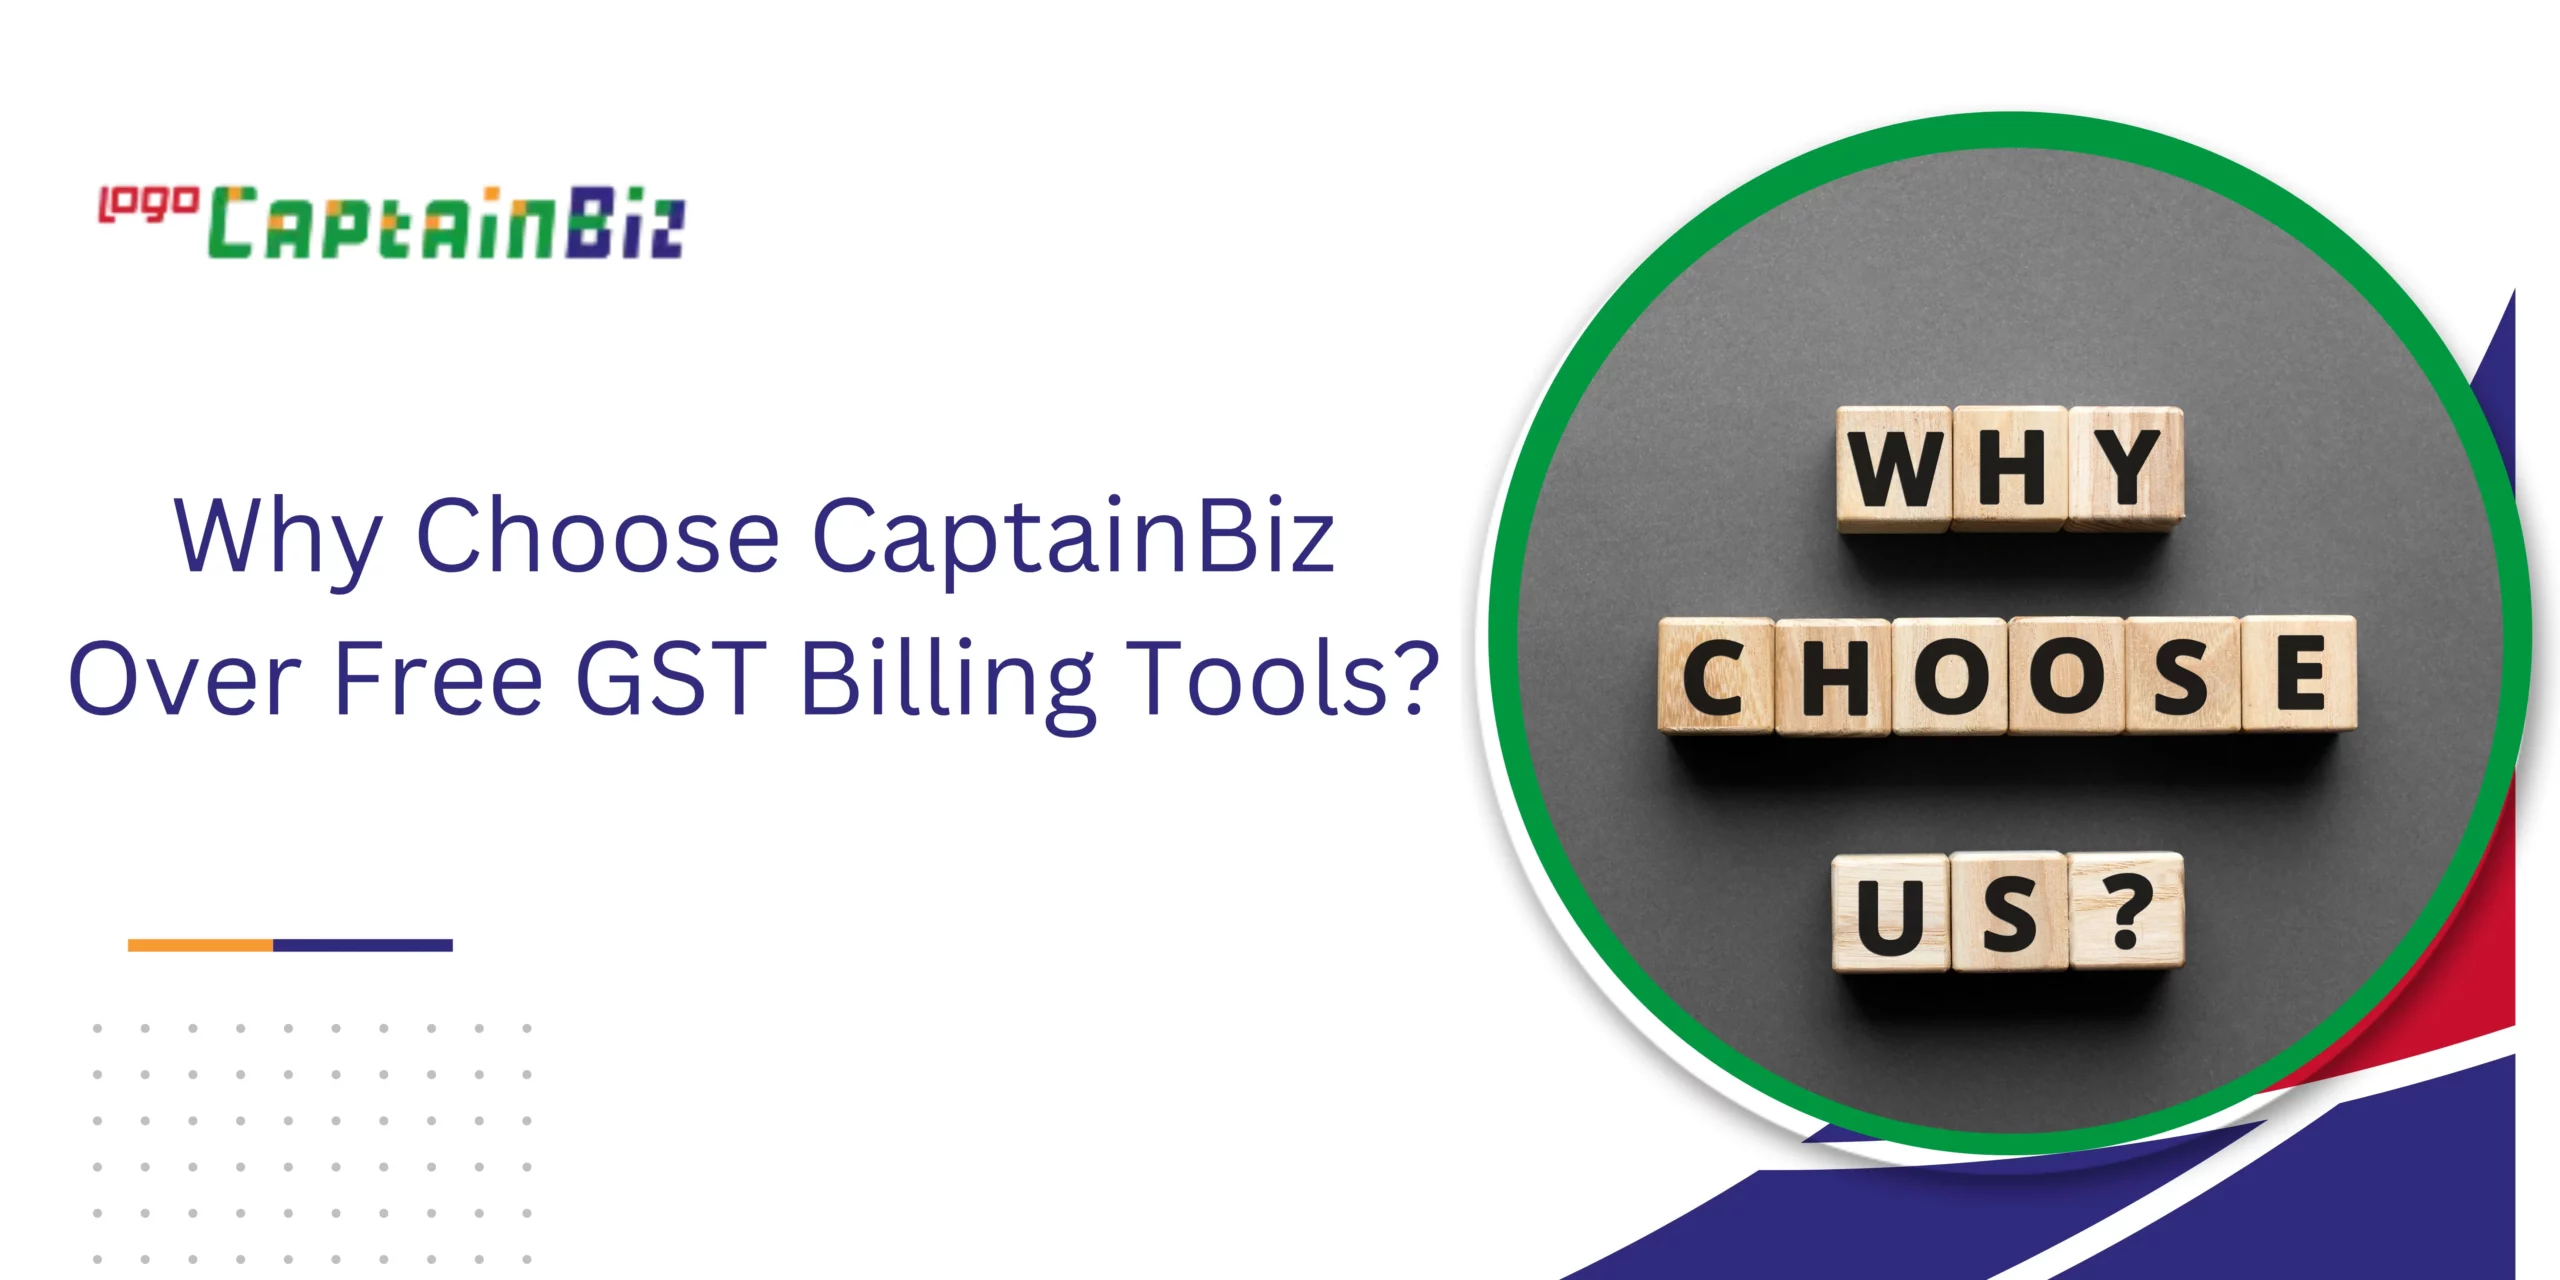 CaptainBiz: Why Choose CaptainBiz Over Free GST Billing Tools